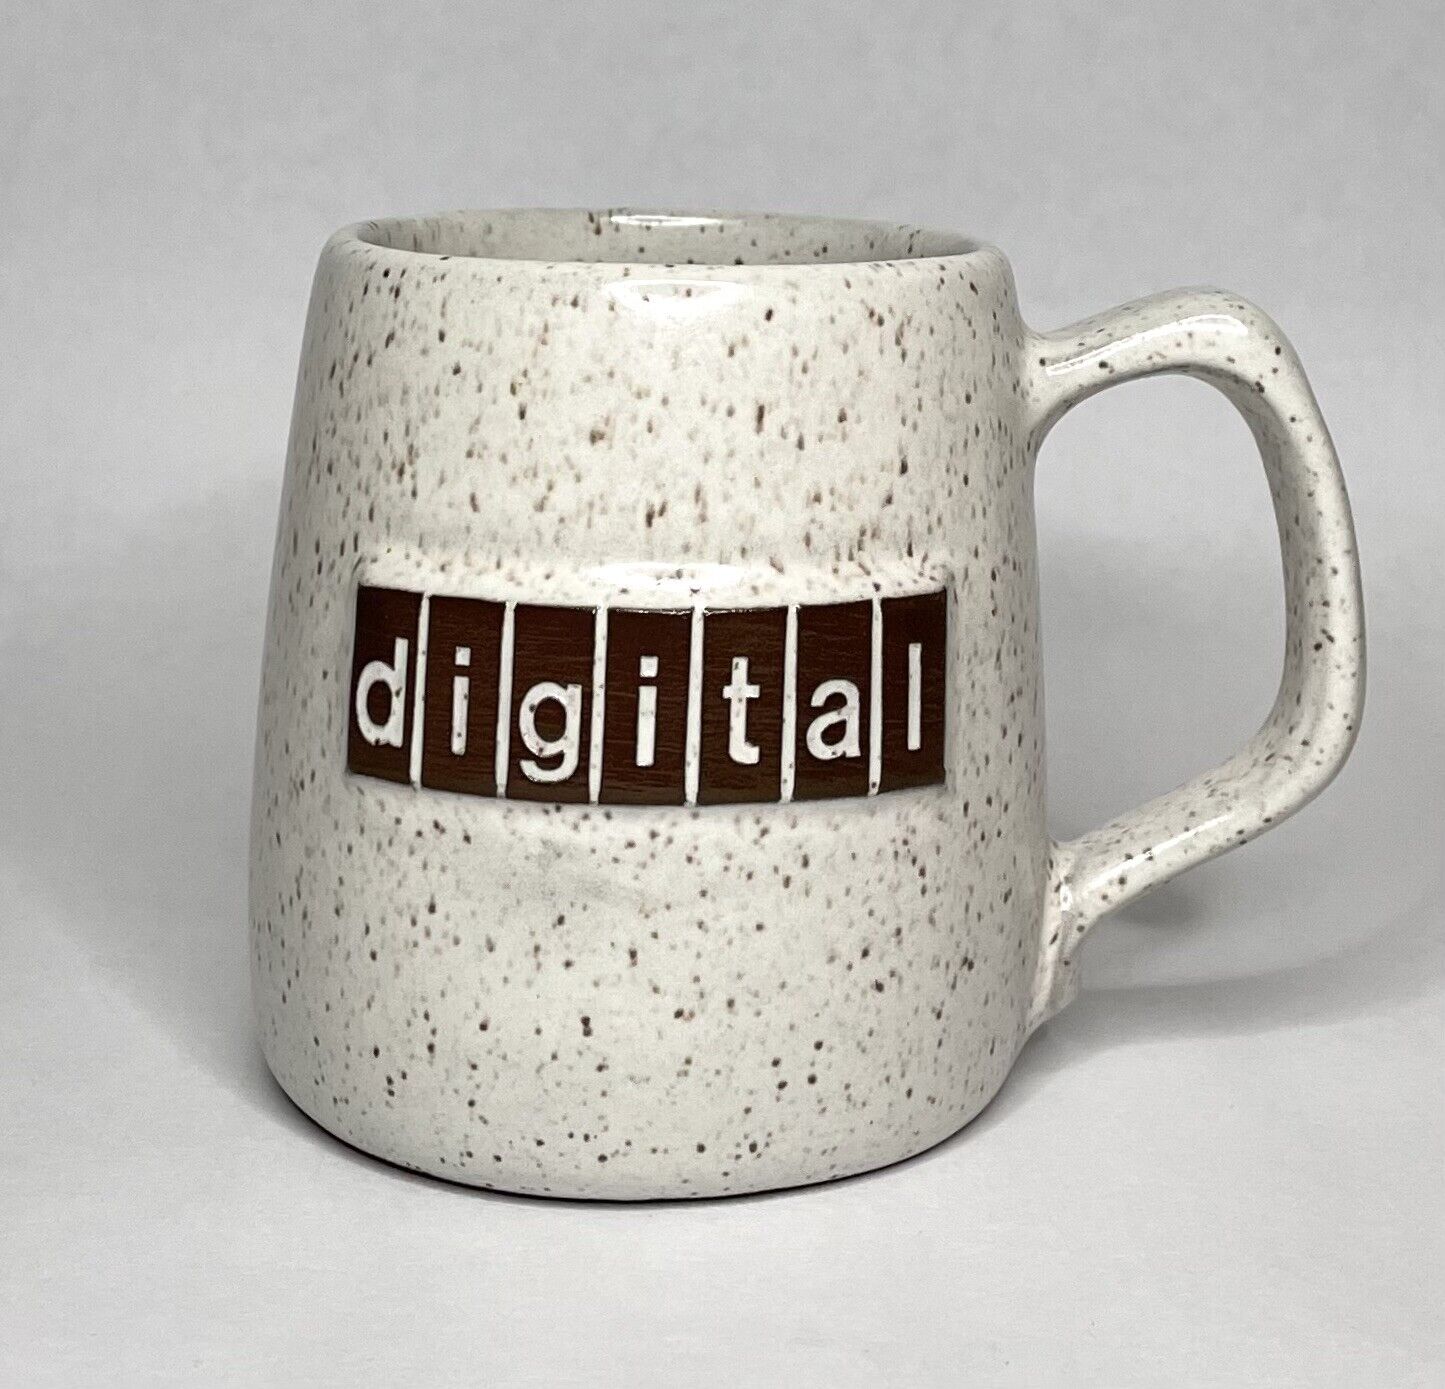 Vintage “digital” Coffee Mug Speckled Cream and Brown